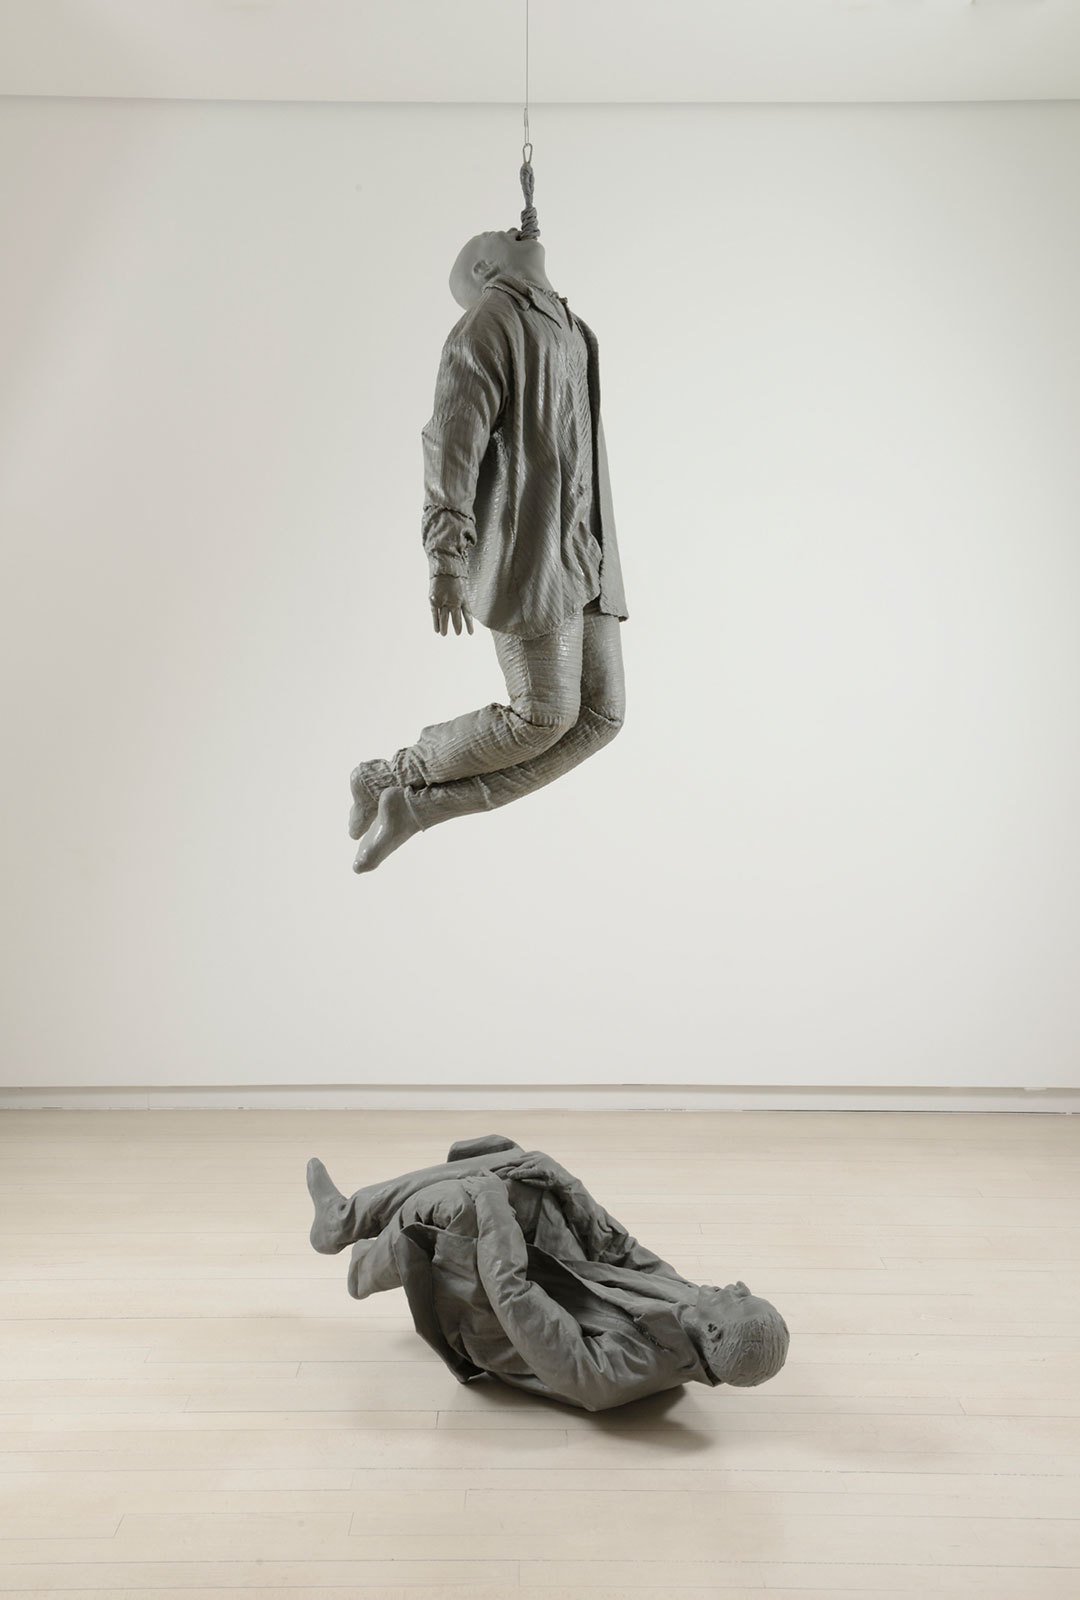 Juan Mu&ntilde;oz. Two figures one laughing at one hanging, 2000&copy; Galer&iacute;a Elvira Gonz&aacute;lez